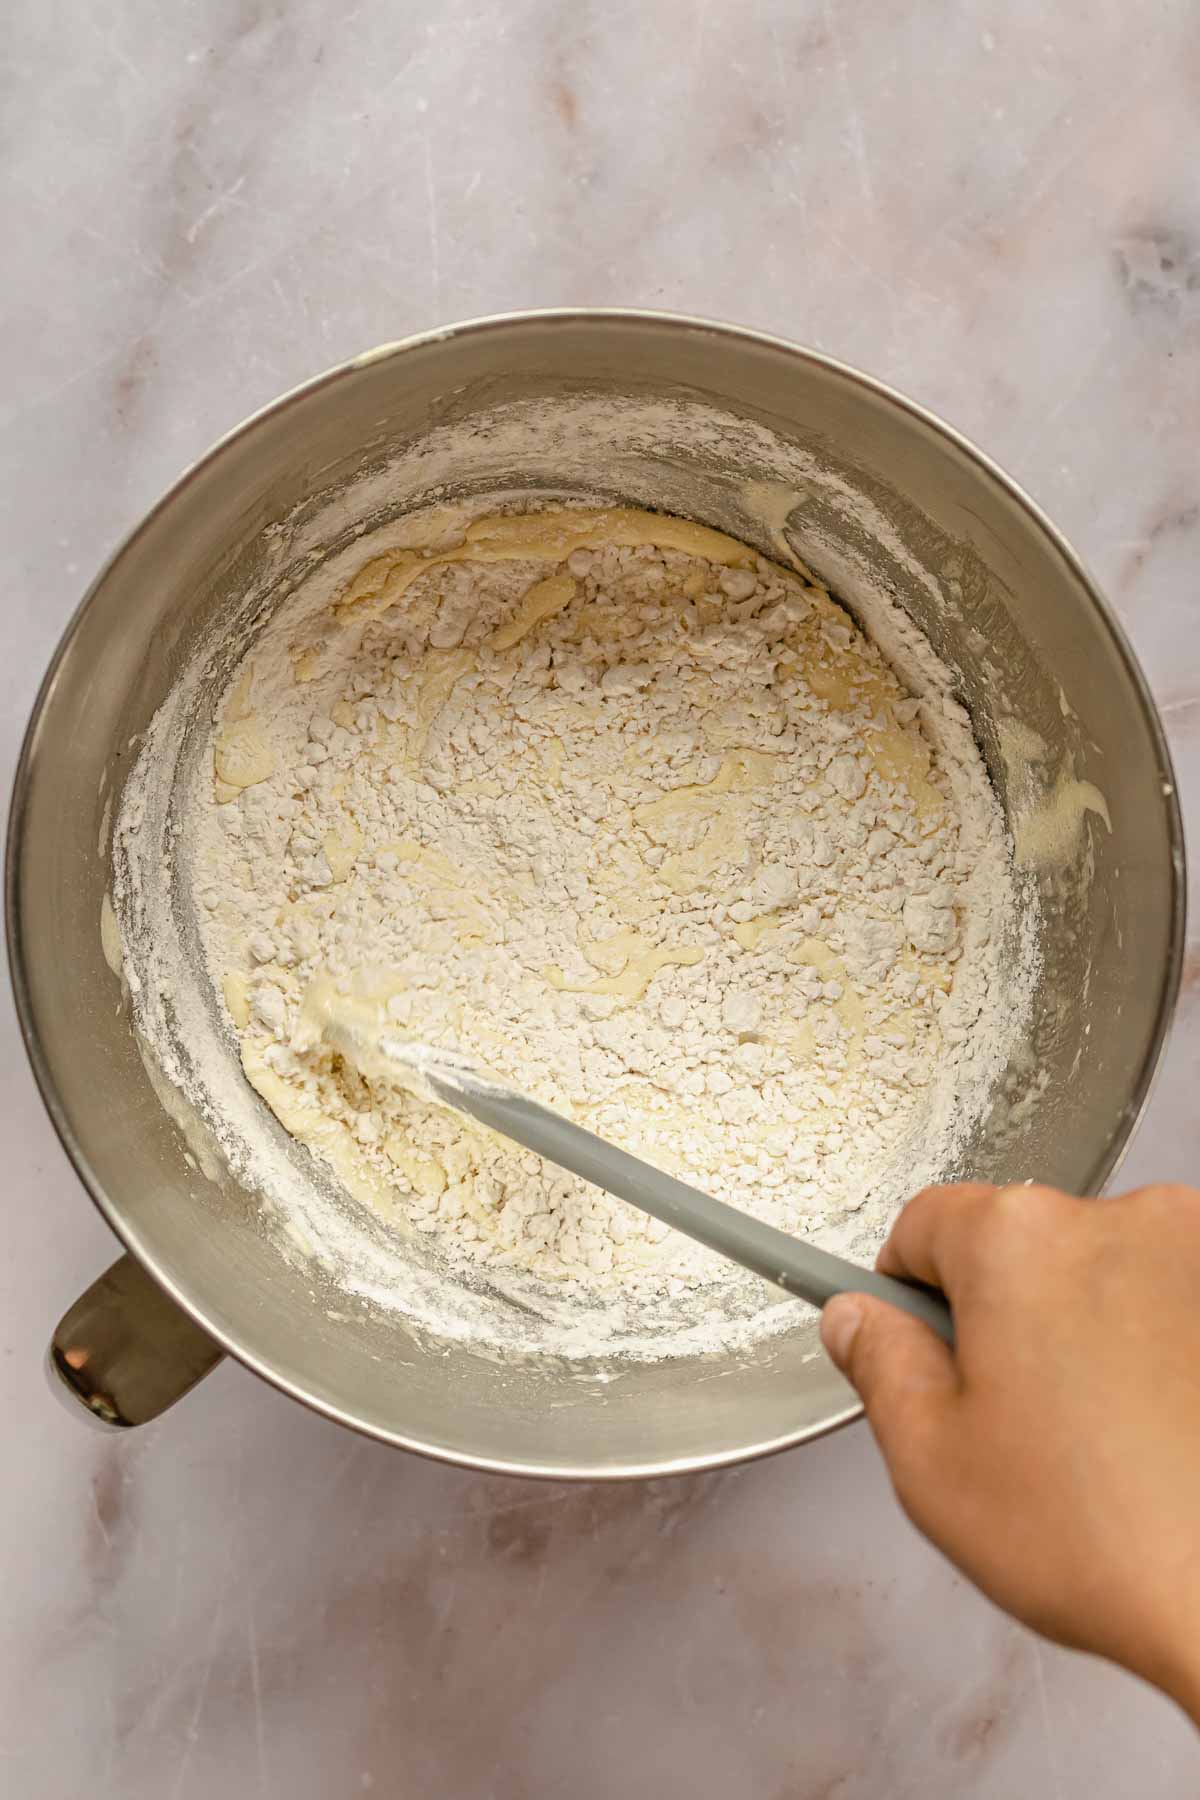 A hand and spatula folds flour into cake batter.